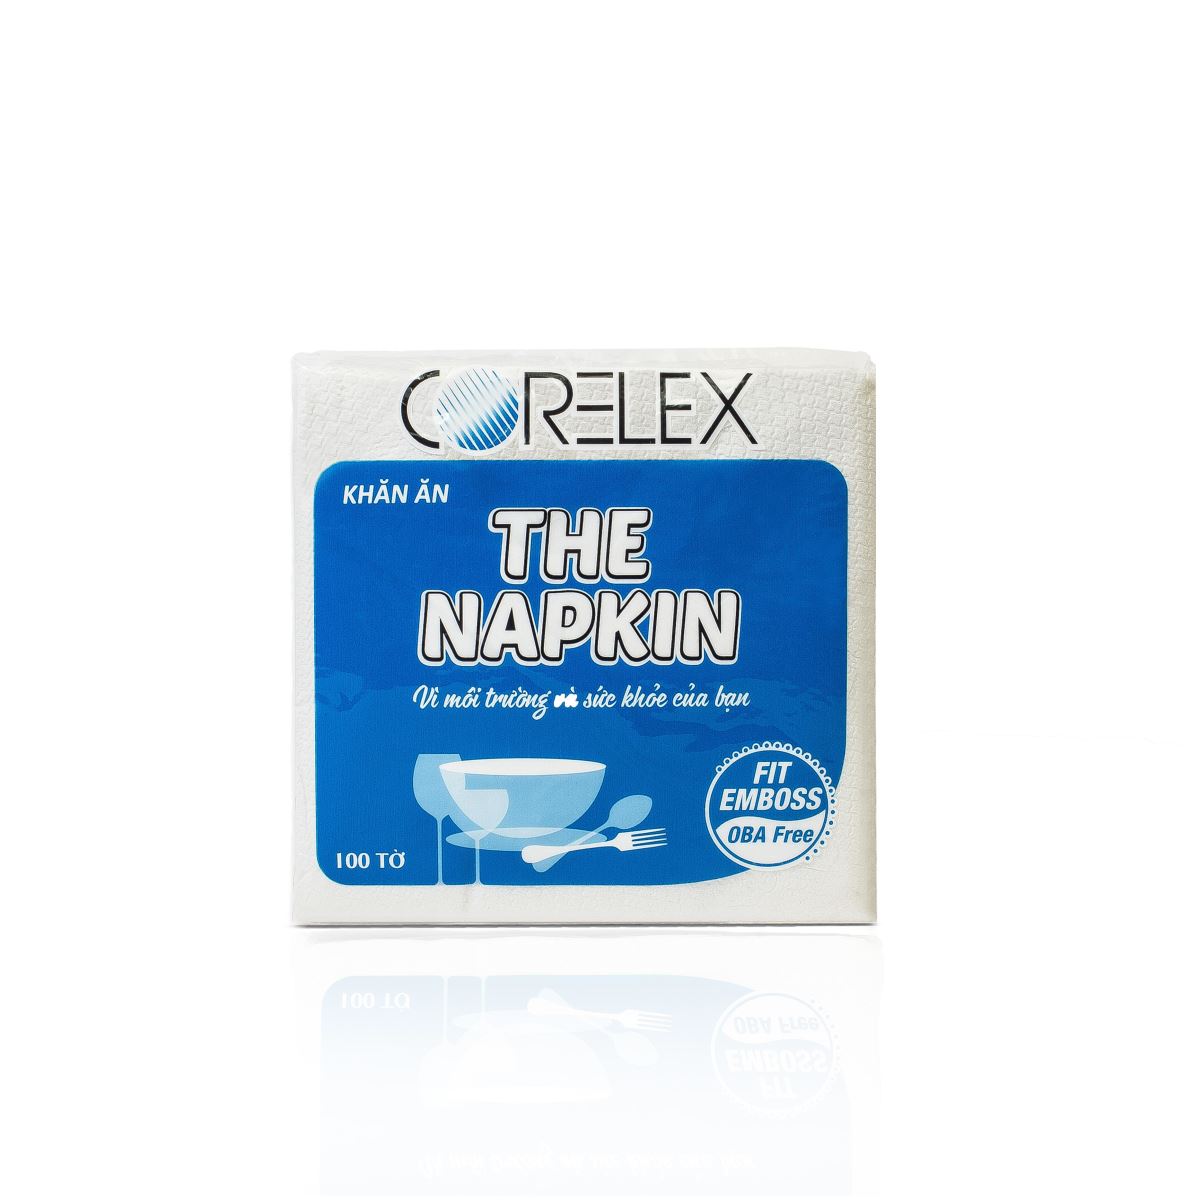 Khăn giấy Corelex Napkin